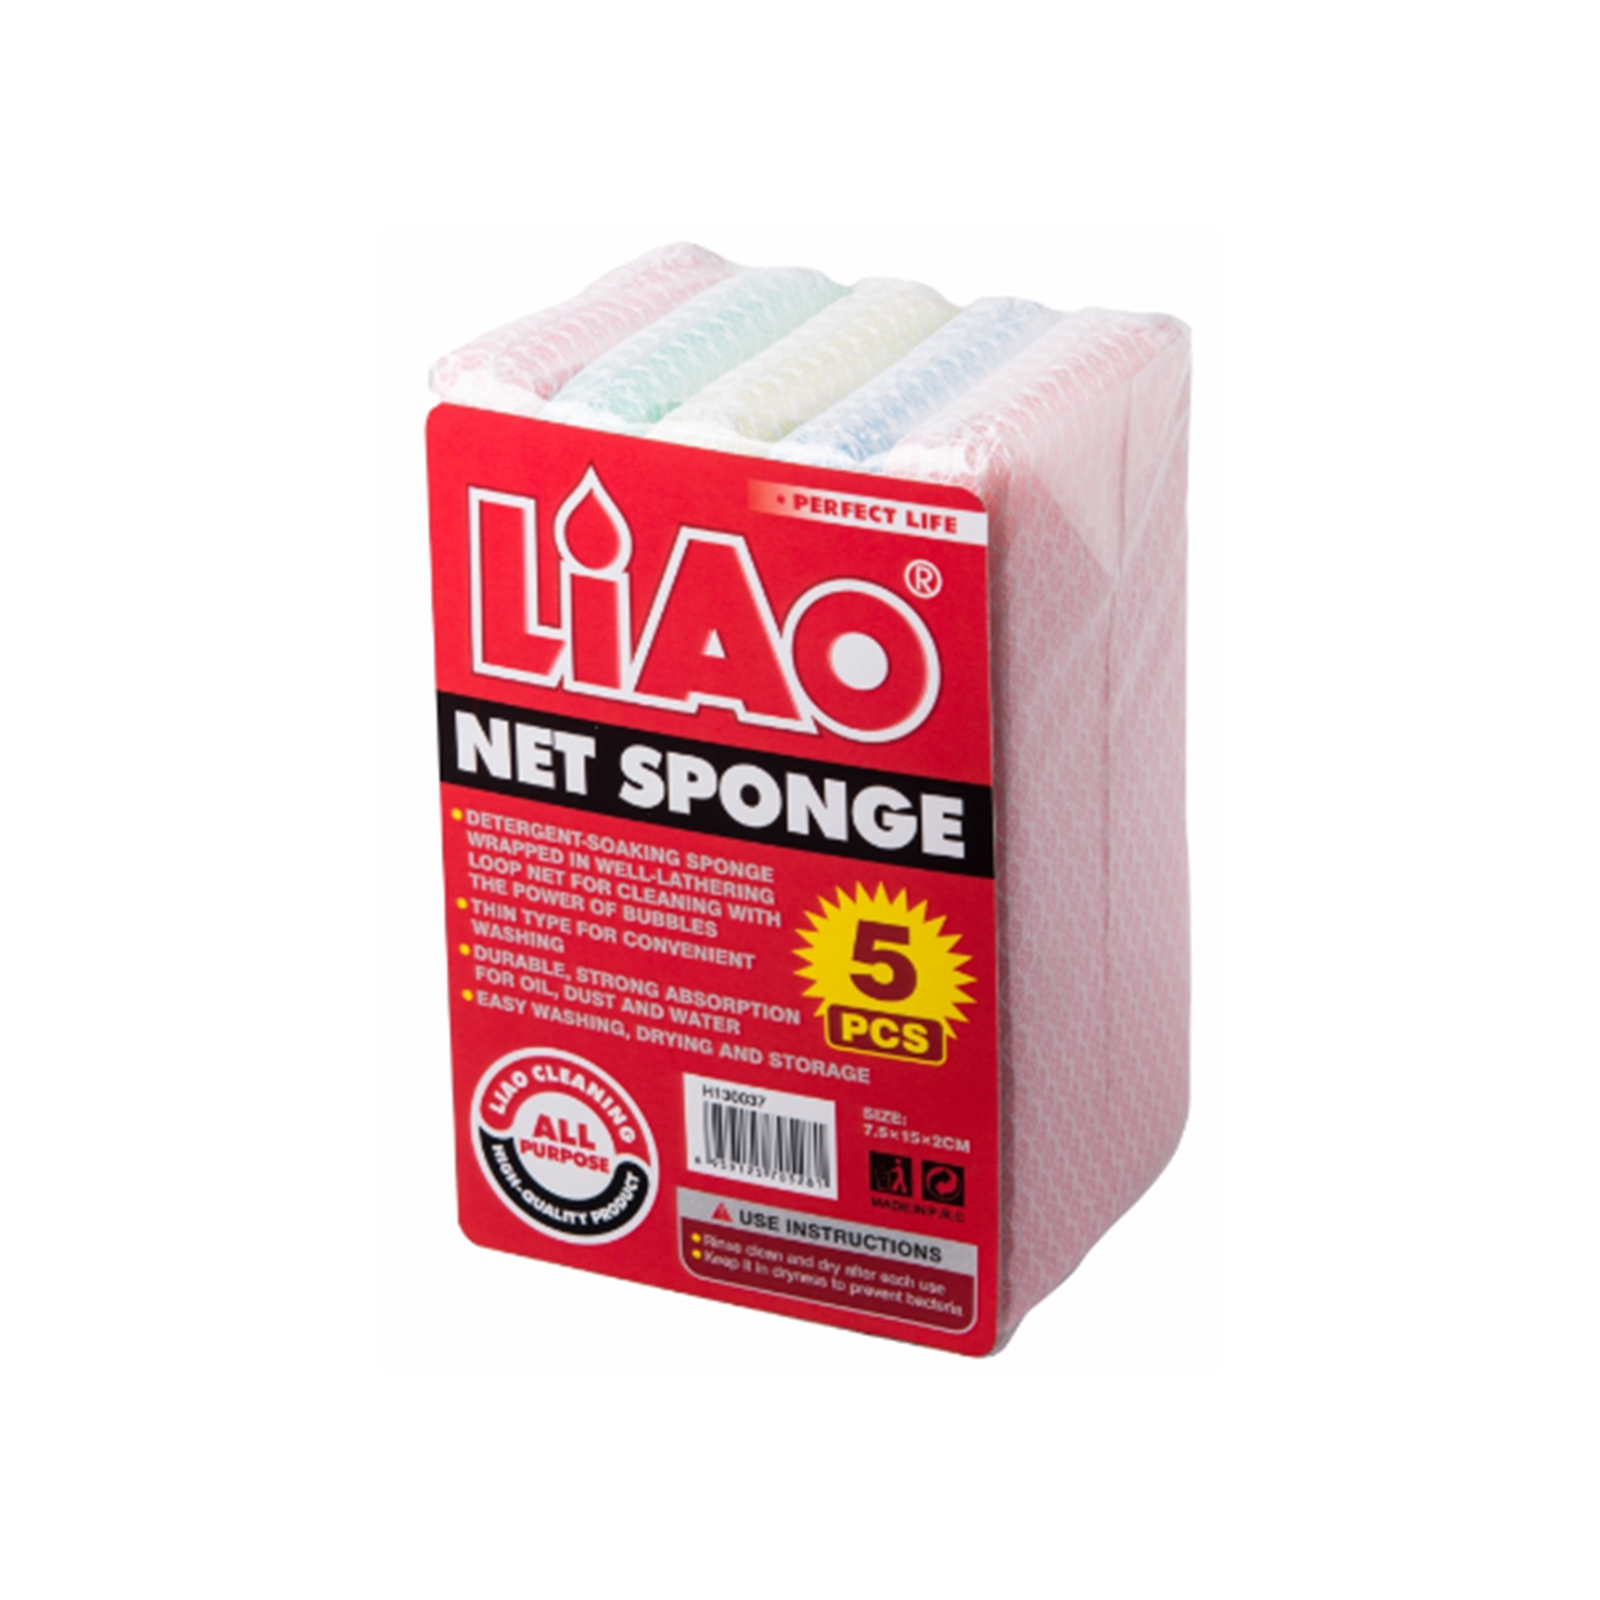 LIAO - Net Sponge (Pack of 4)